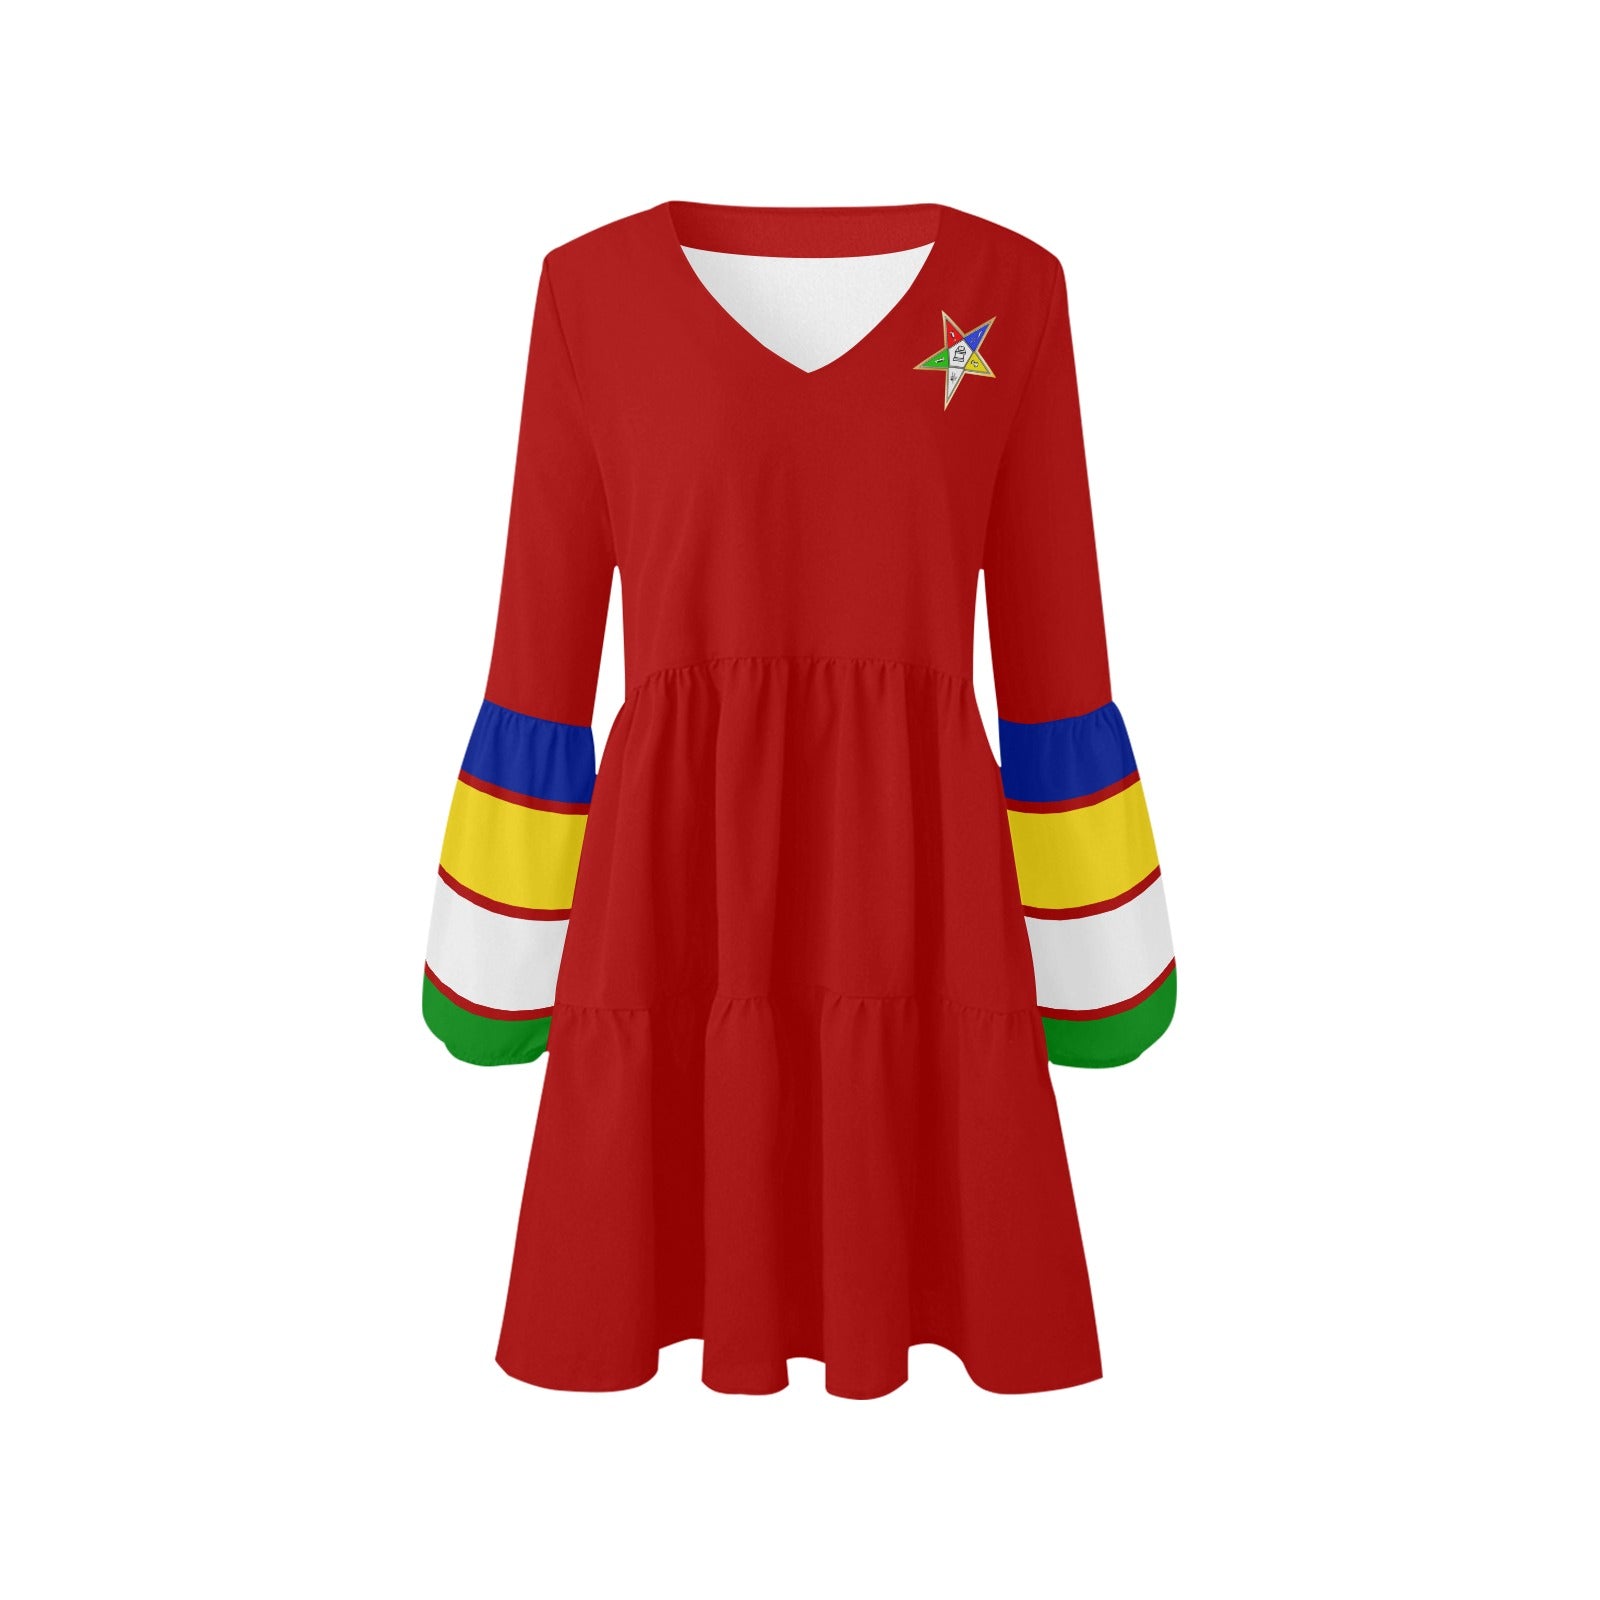 Eastern Star Lovely Sistar Dress Red V-Neck Loose Fit Dress